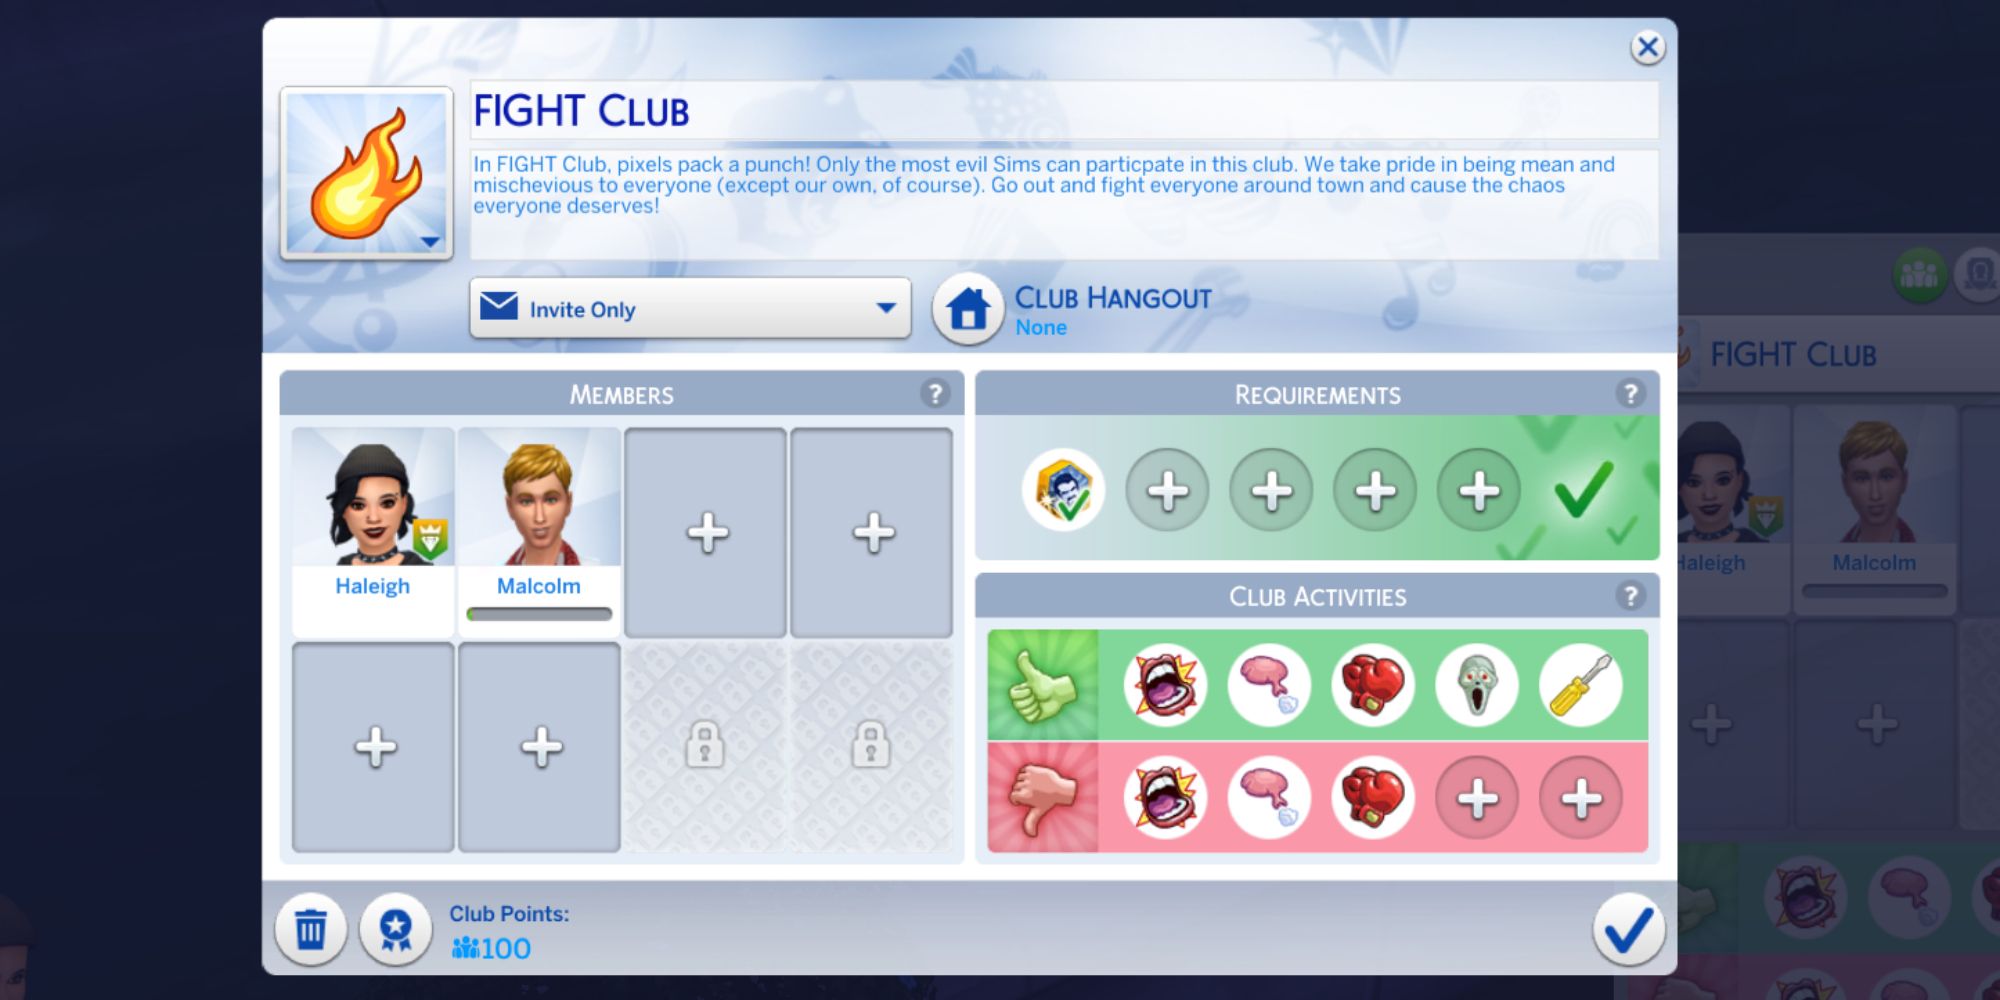 An evil Sim creates a fight club to encourage mischief around town